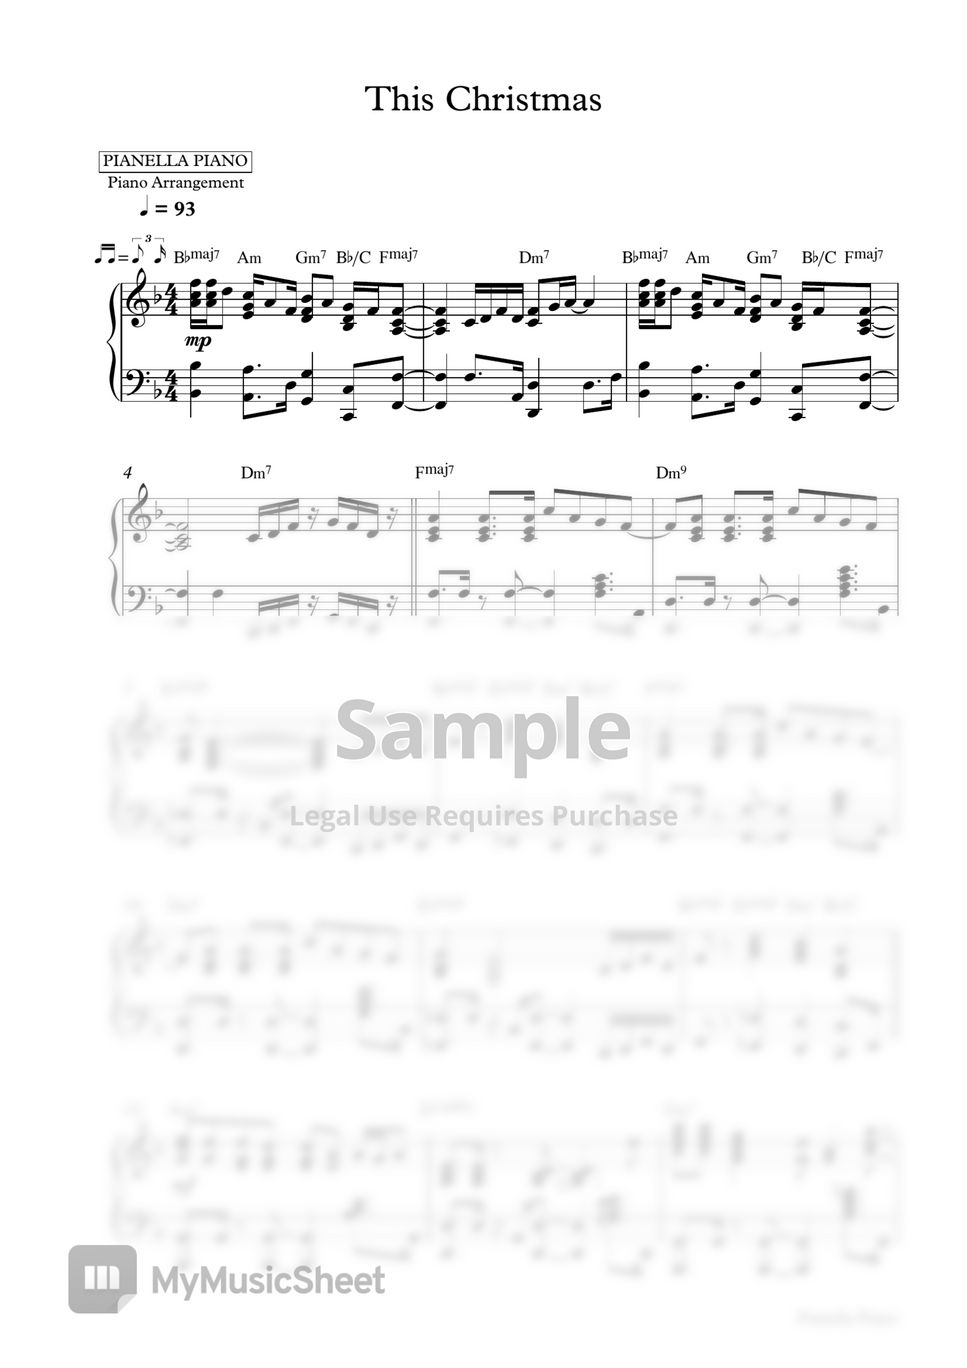 Chris Brown - This Christmas (Piano Sheet) by Pianella Piano